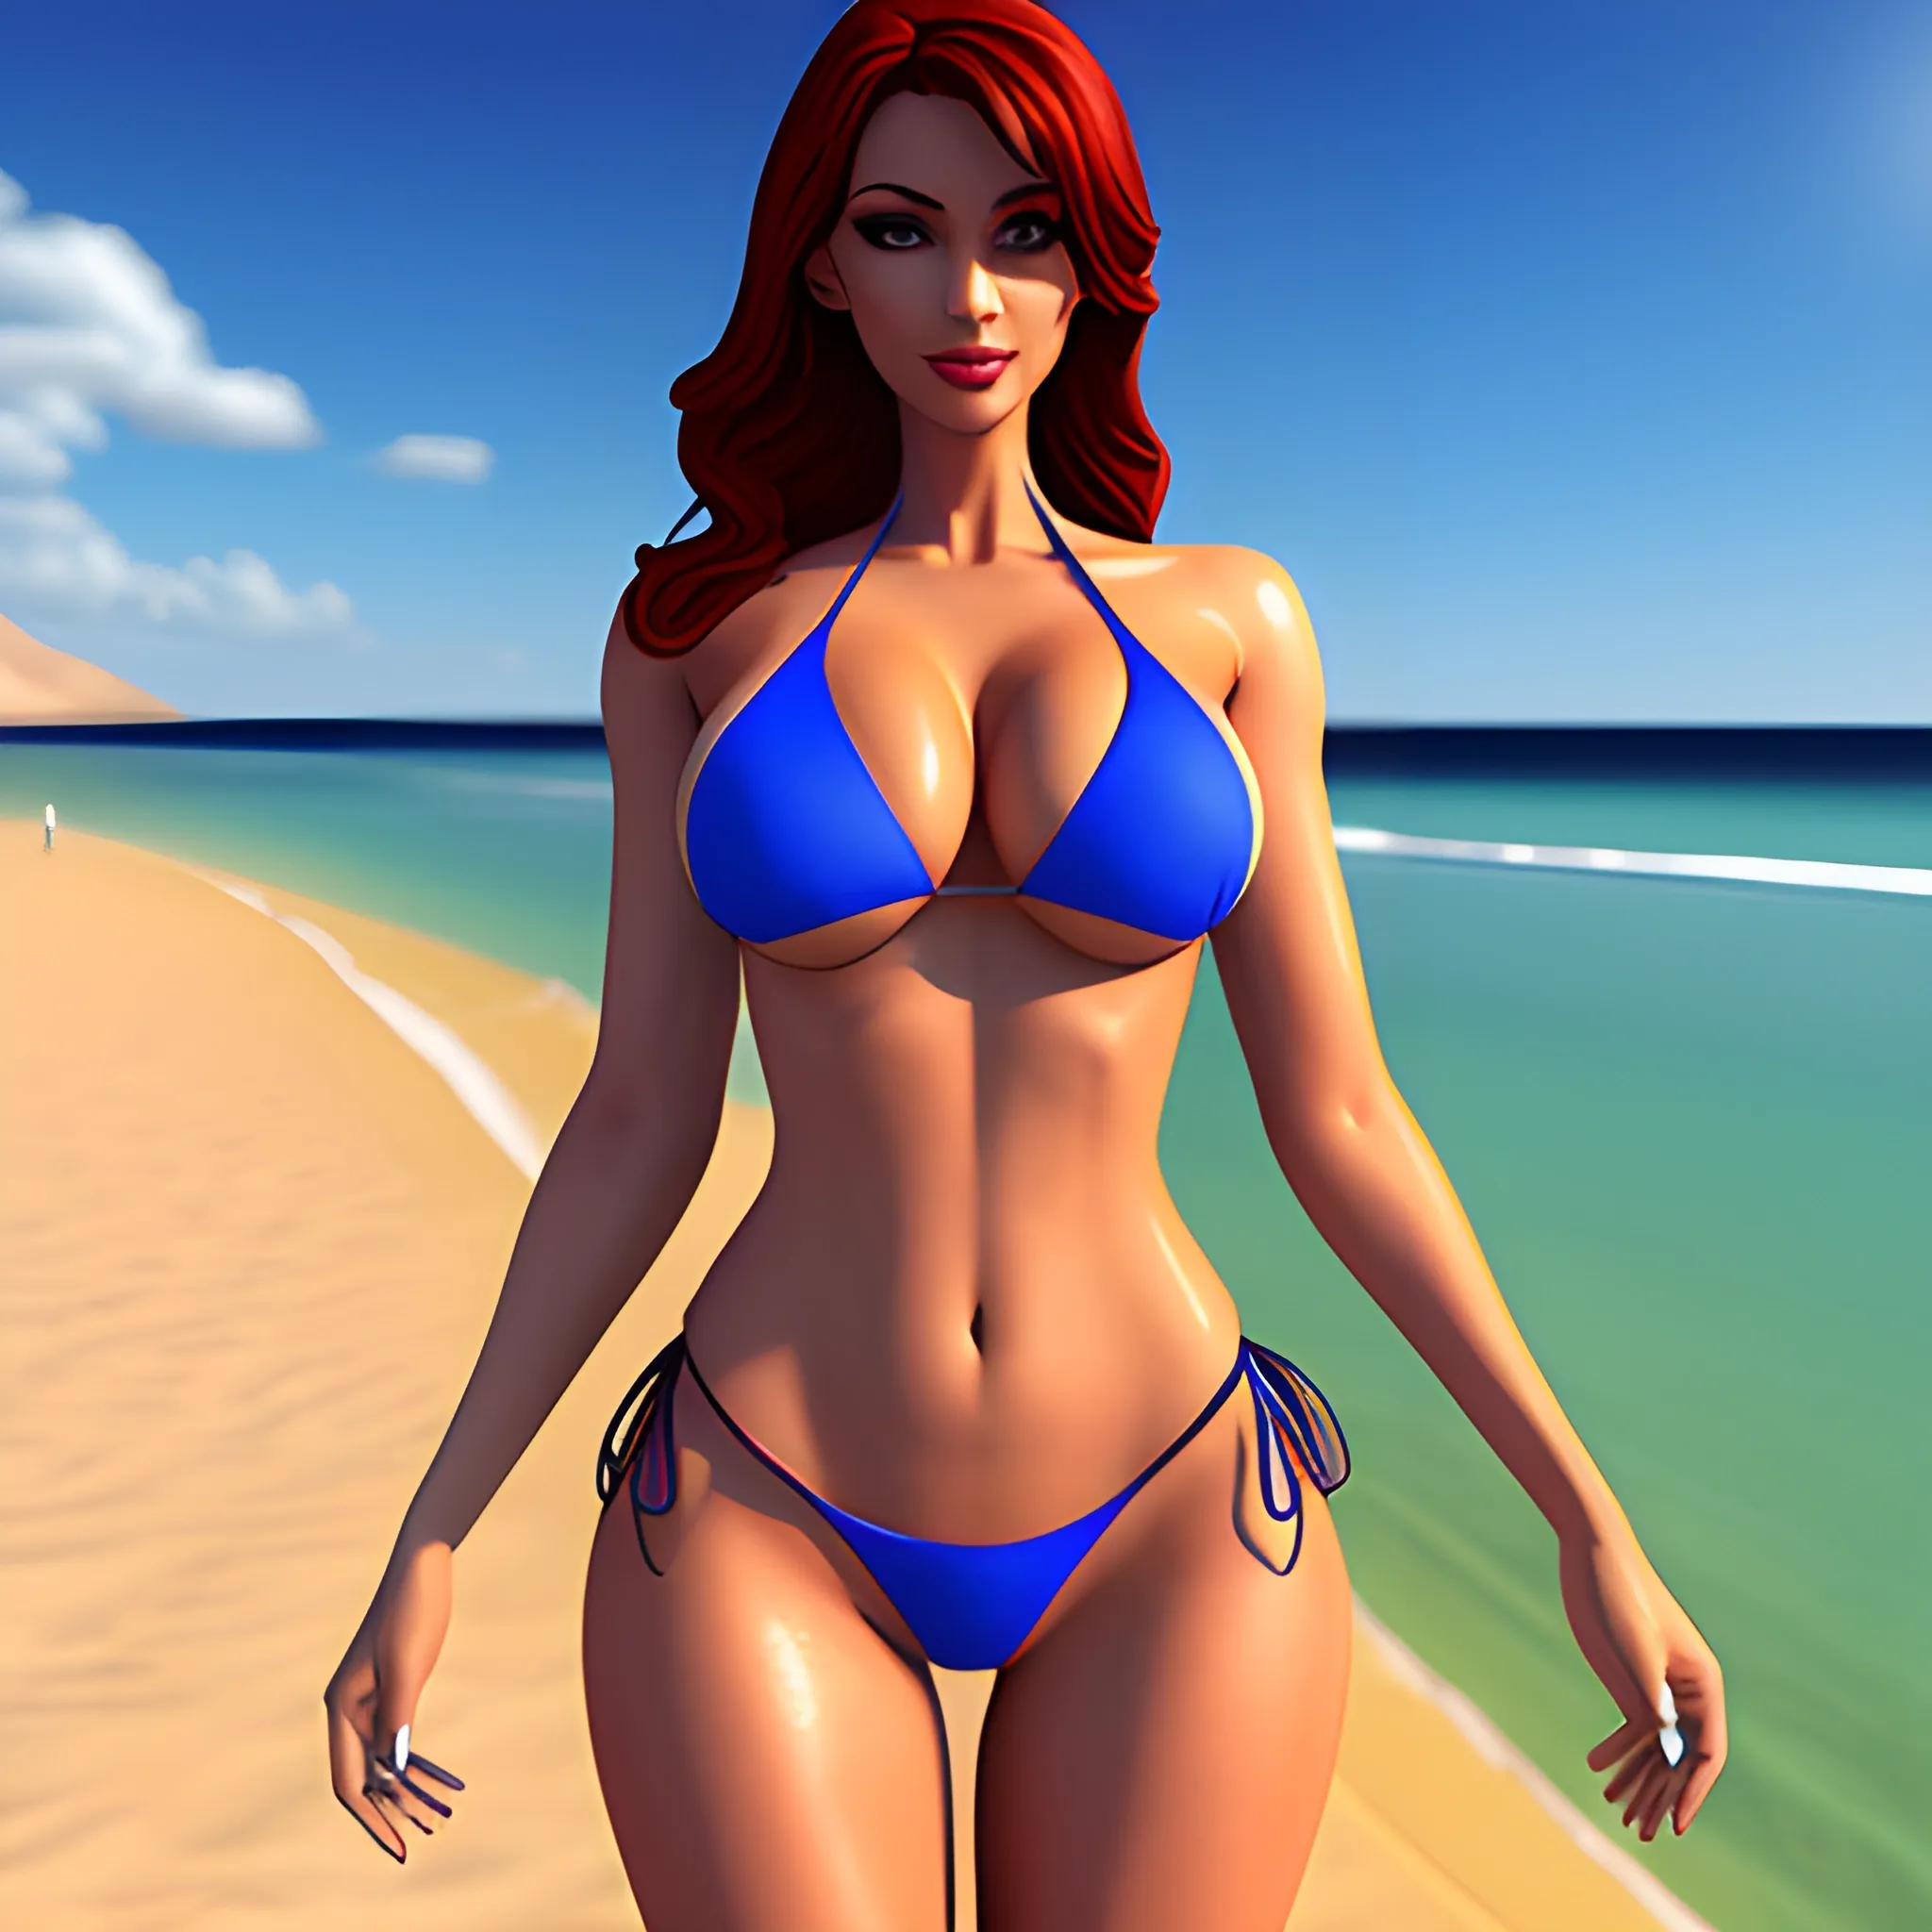 Bikini girl, full body, 3D
